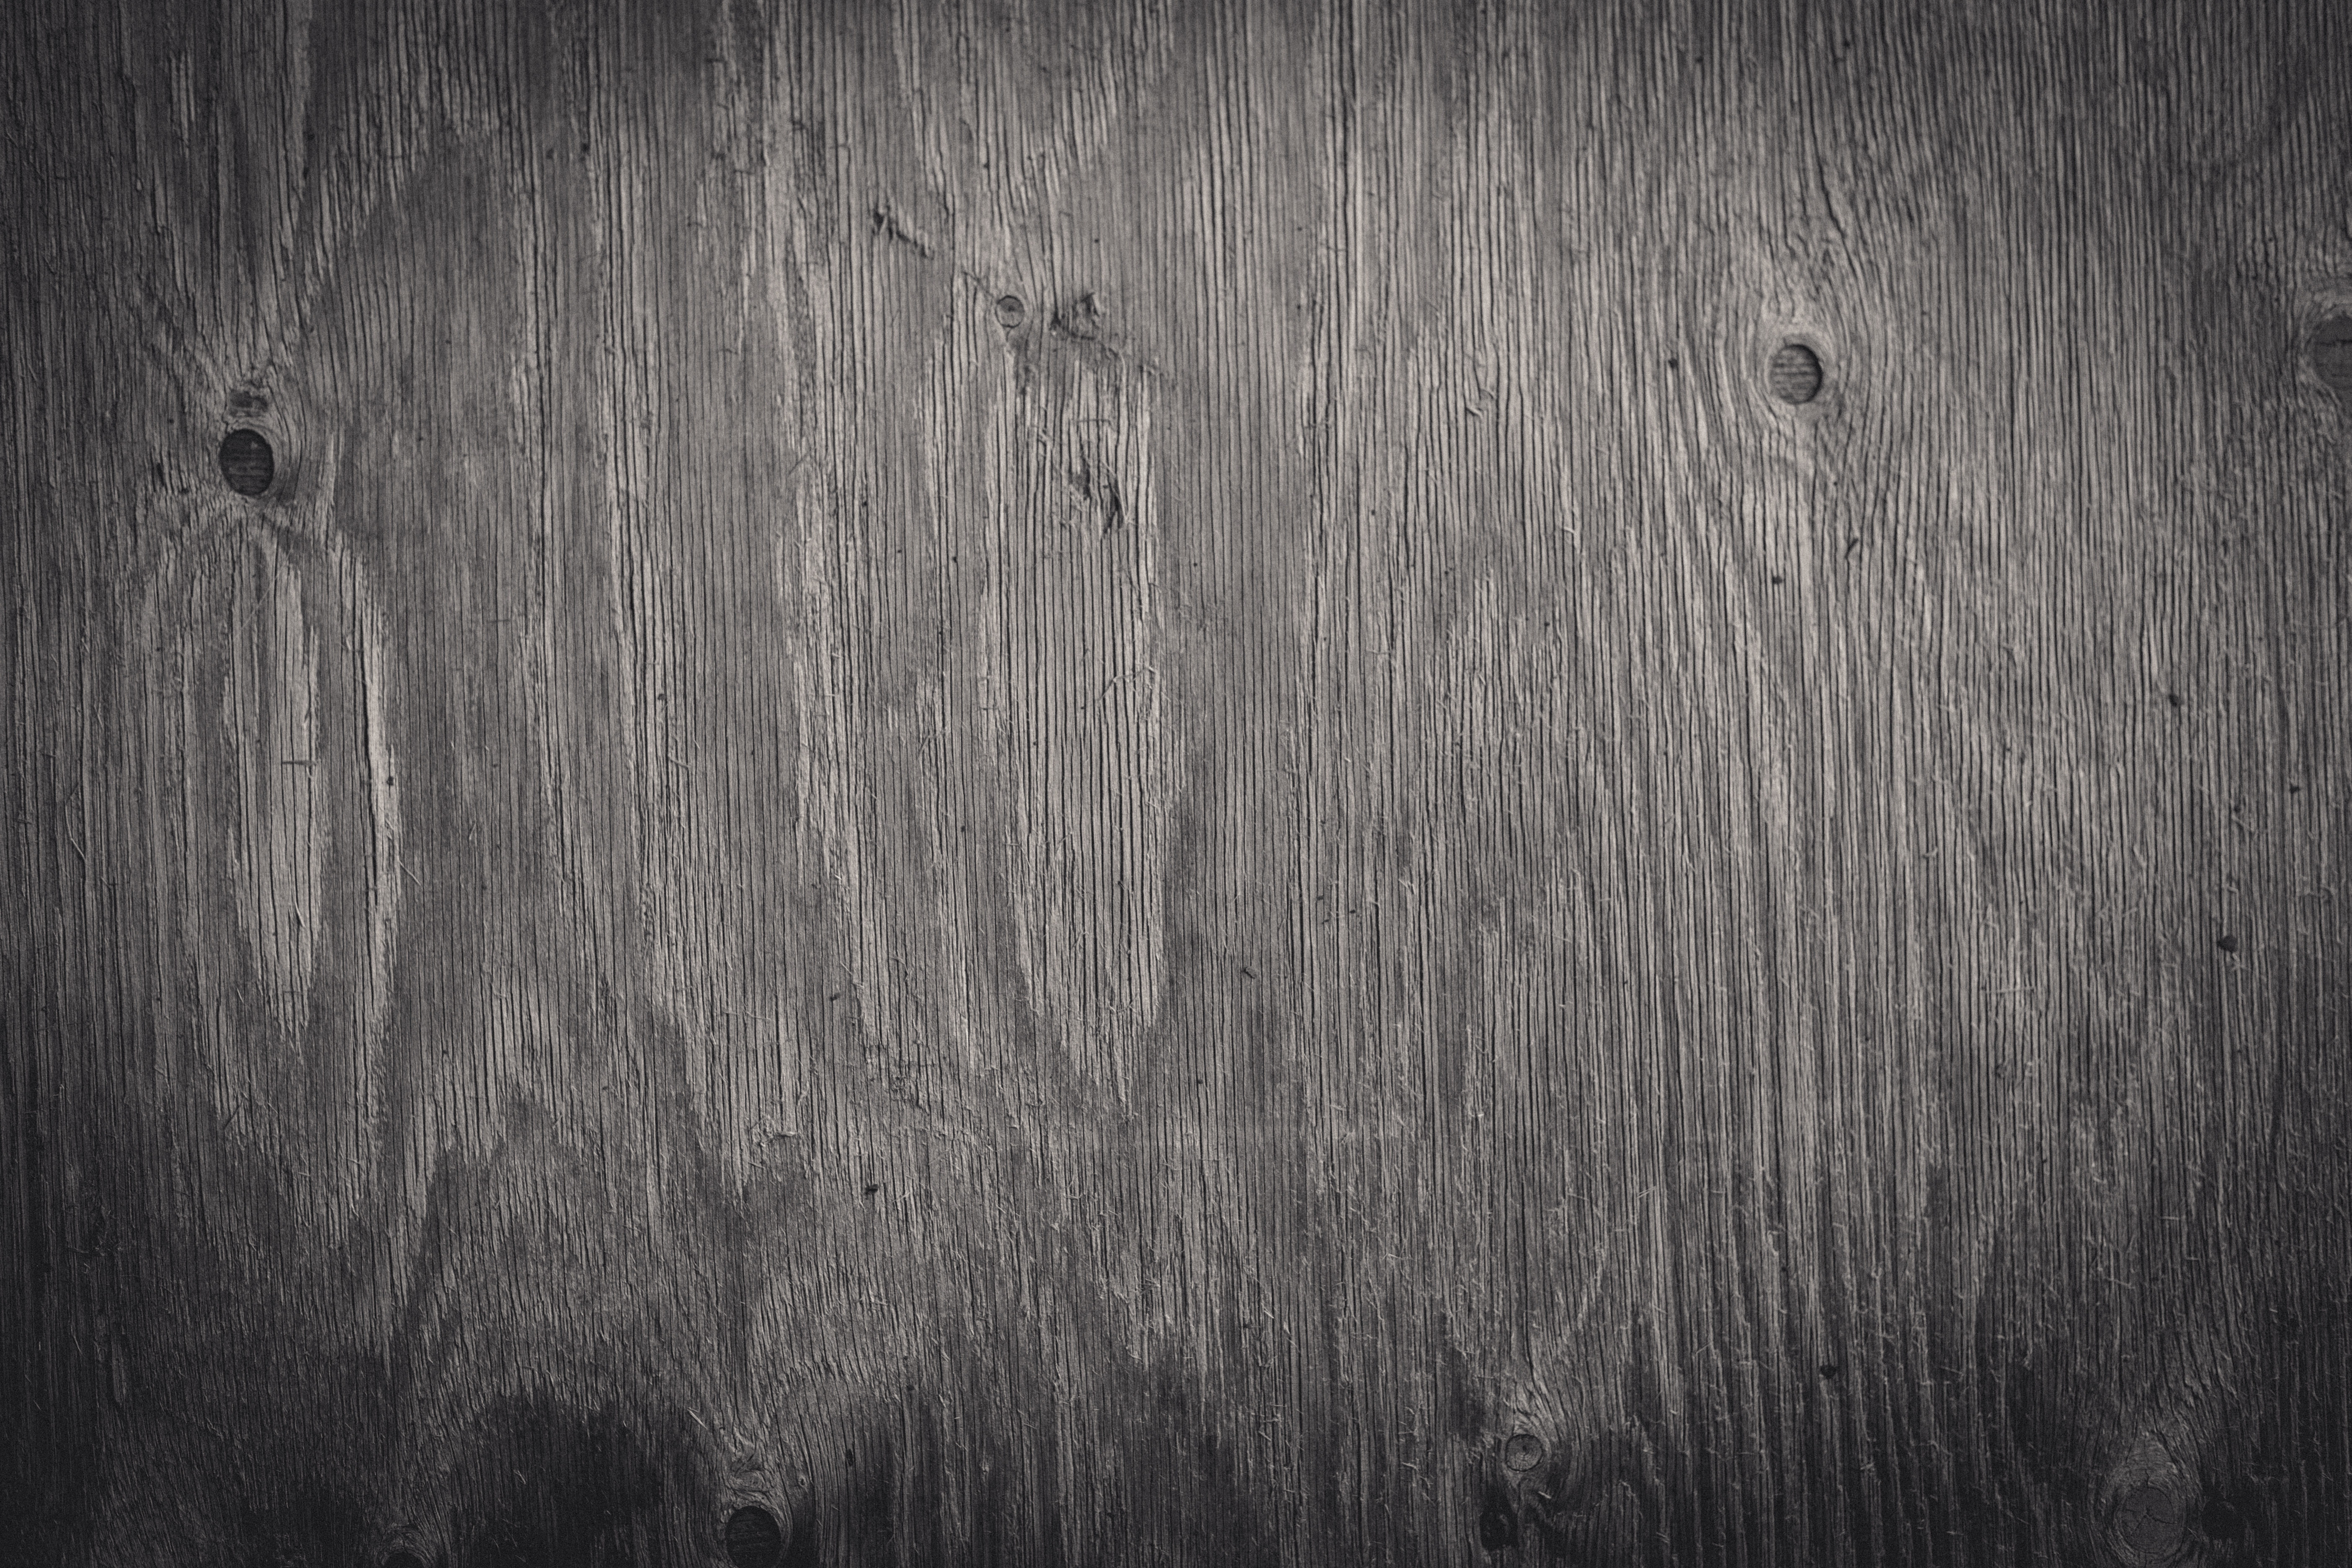 Black & white wood texture photo